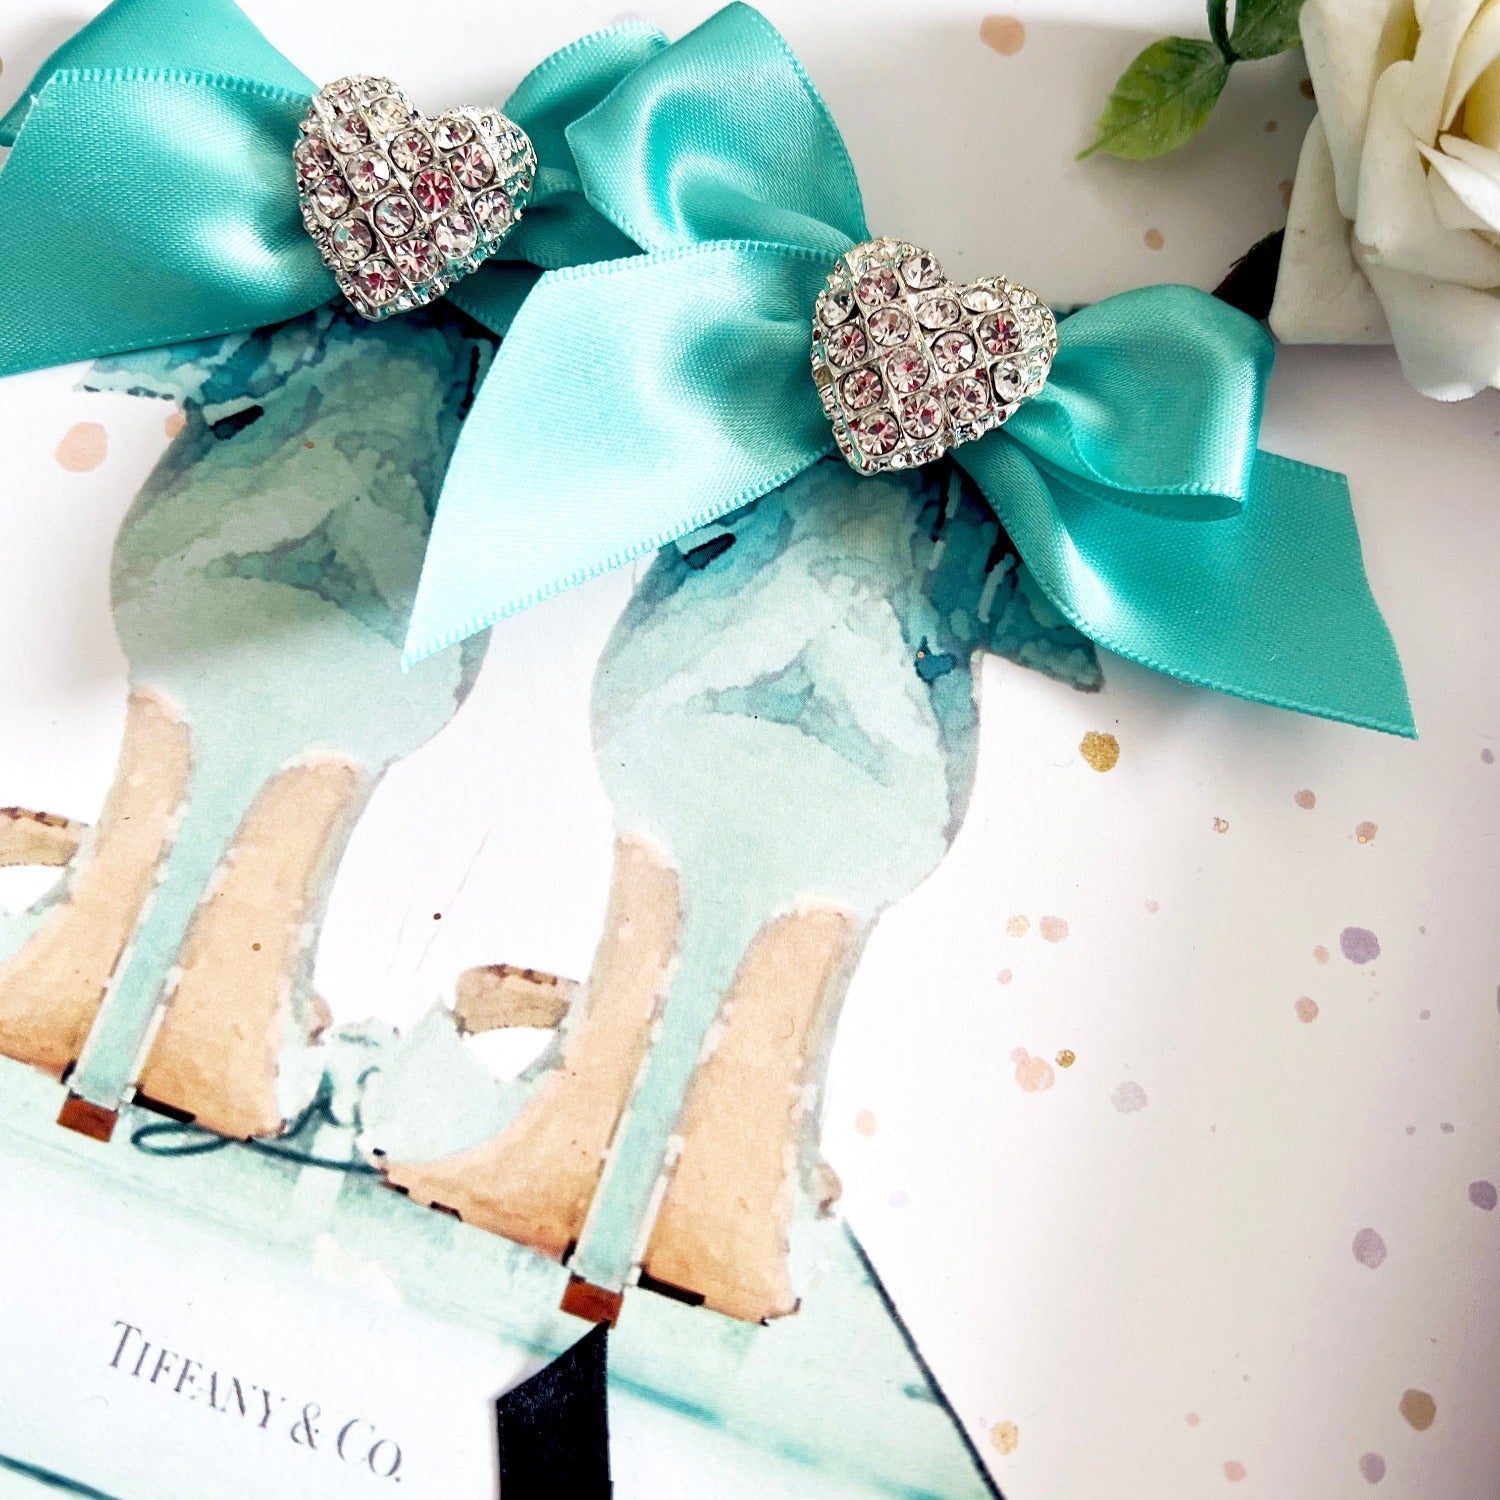 Luxury Stylish Wedding card handmade with tiffany blue ribbon and Tiffany & Co print perfect for Tiffany themed weddings